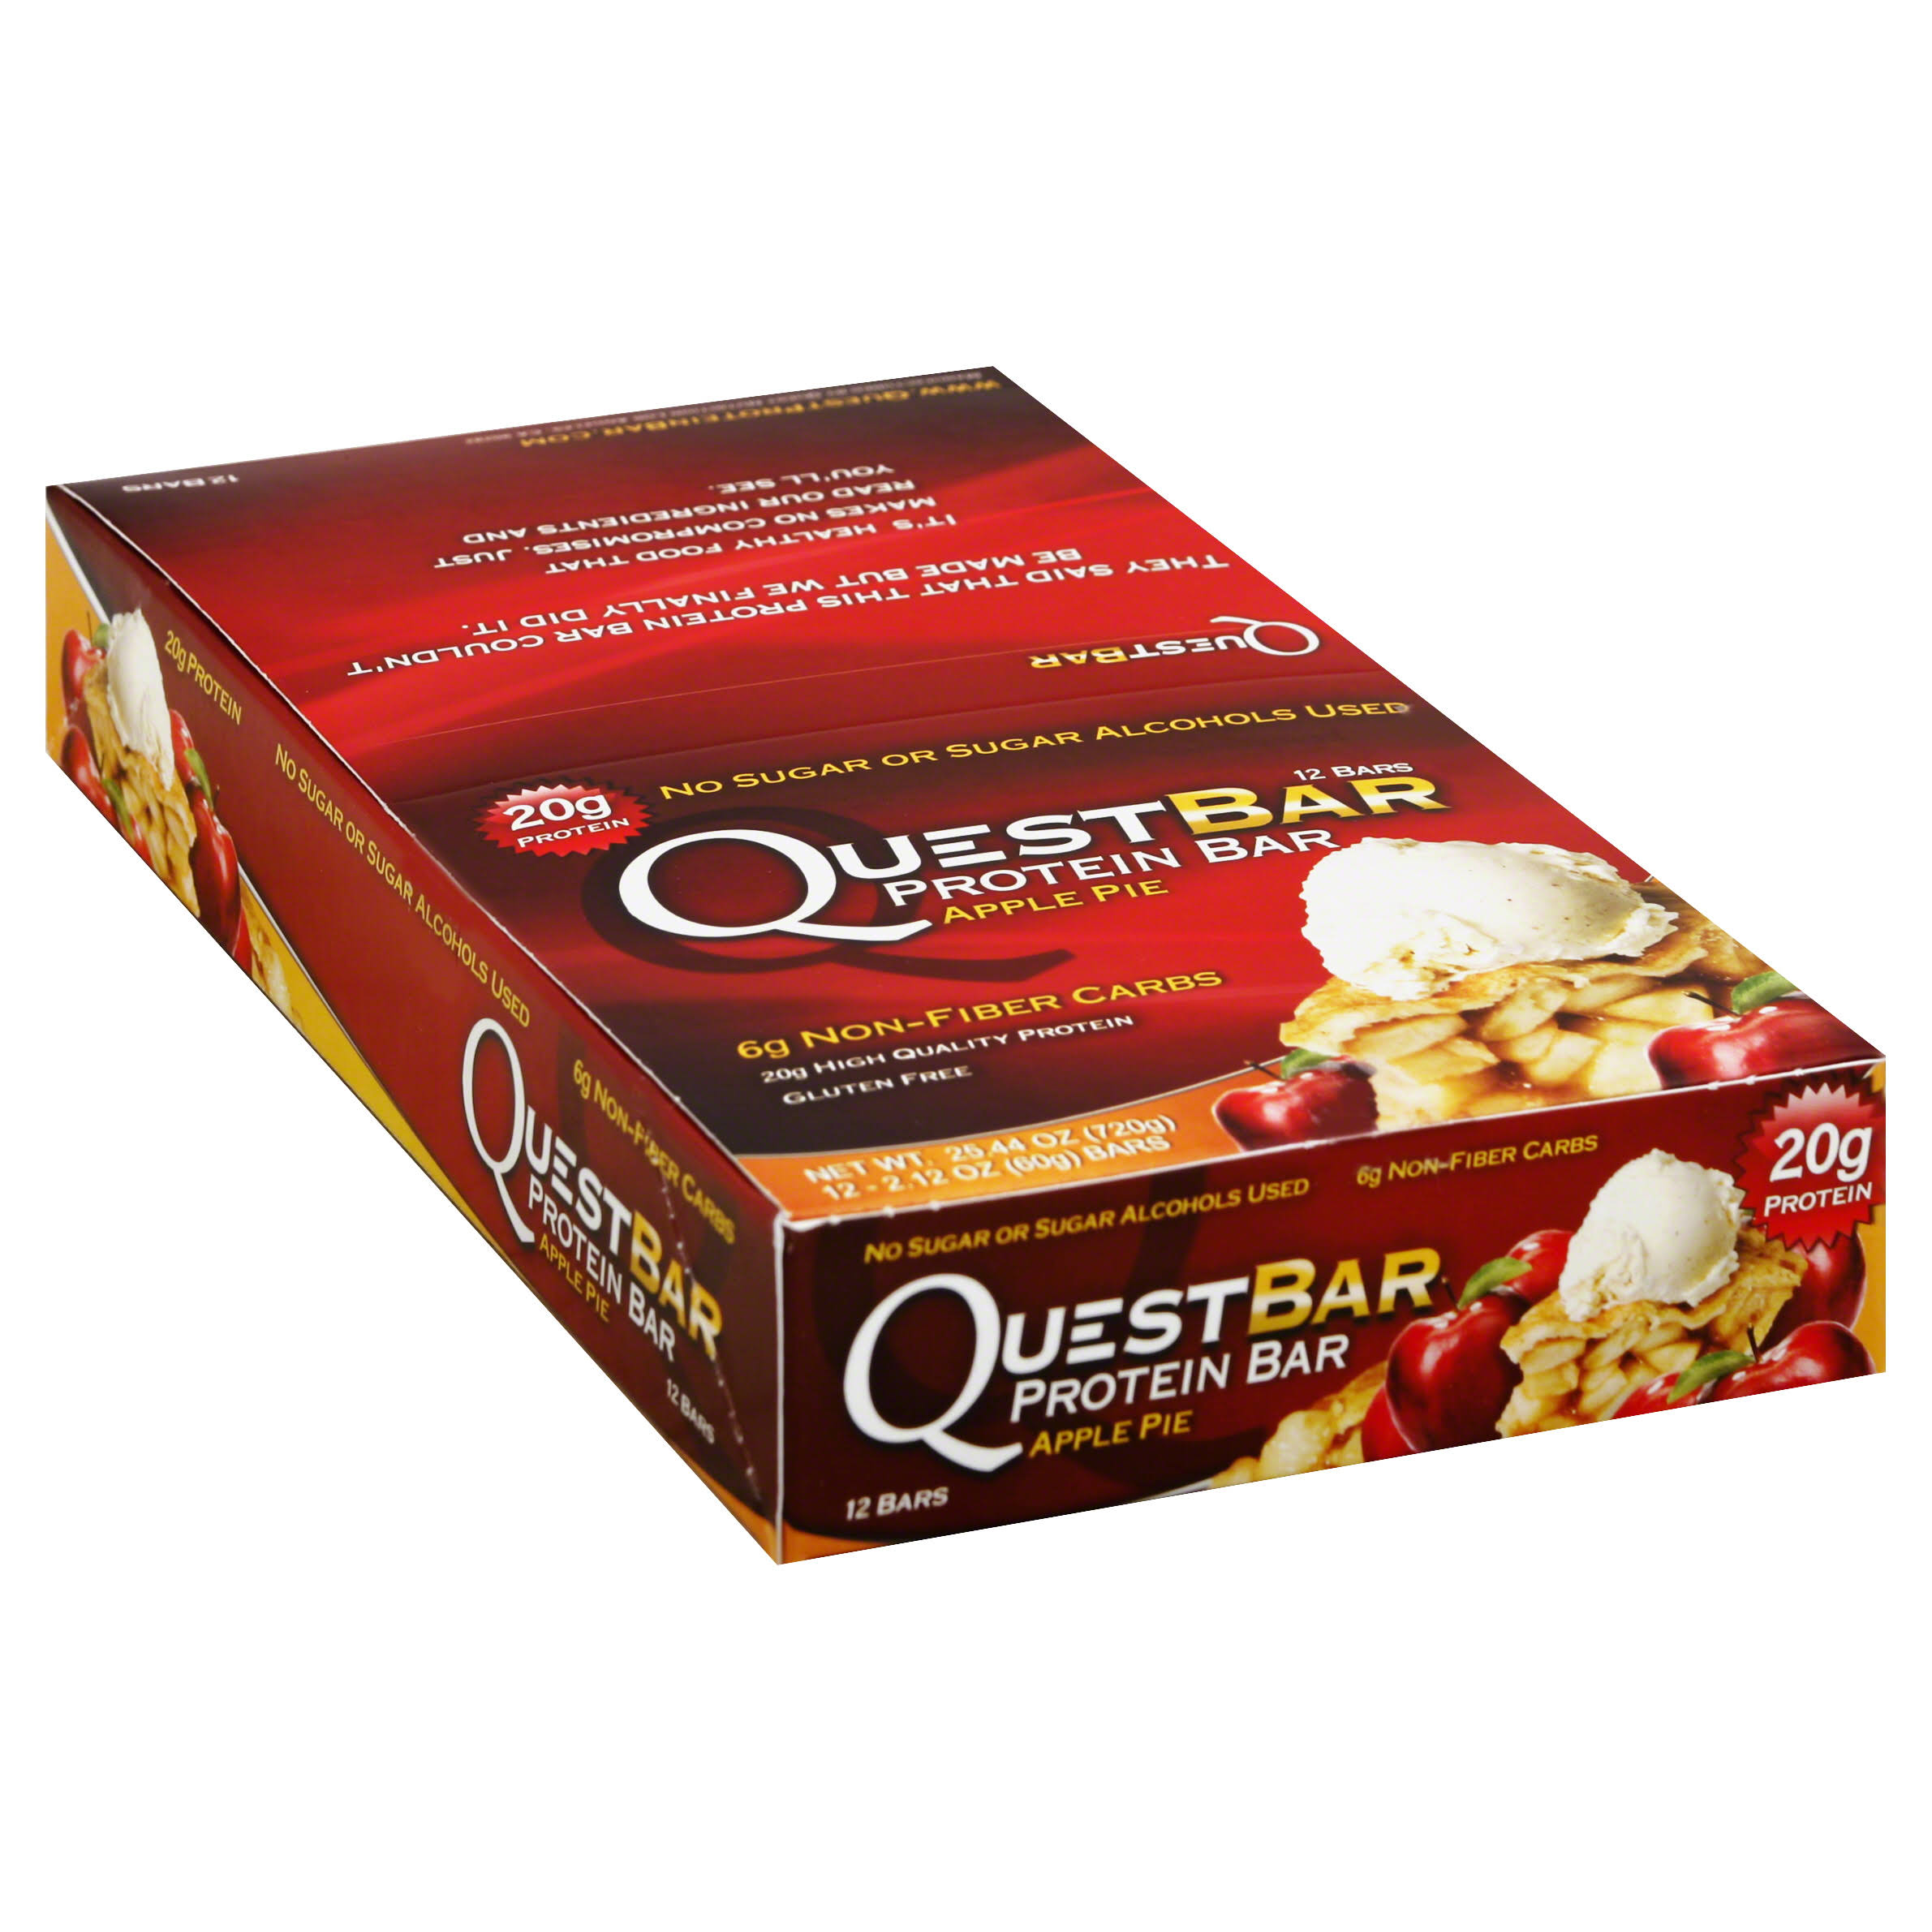 QuestBar Protein Bar - Apple Pie, x12